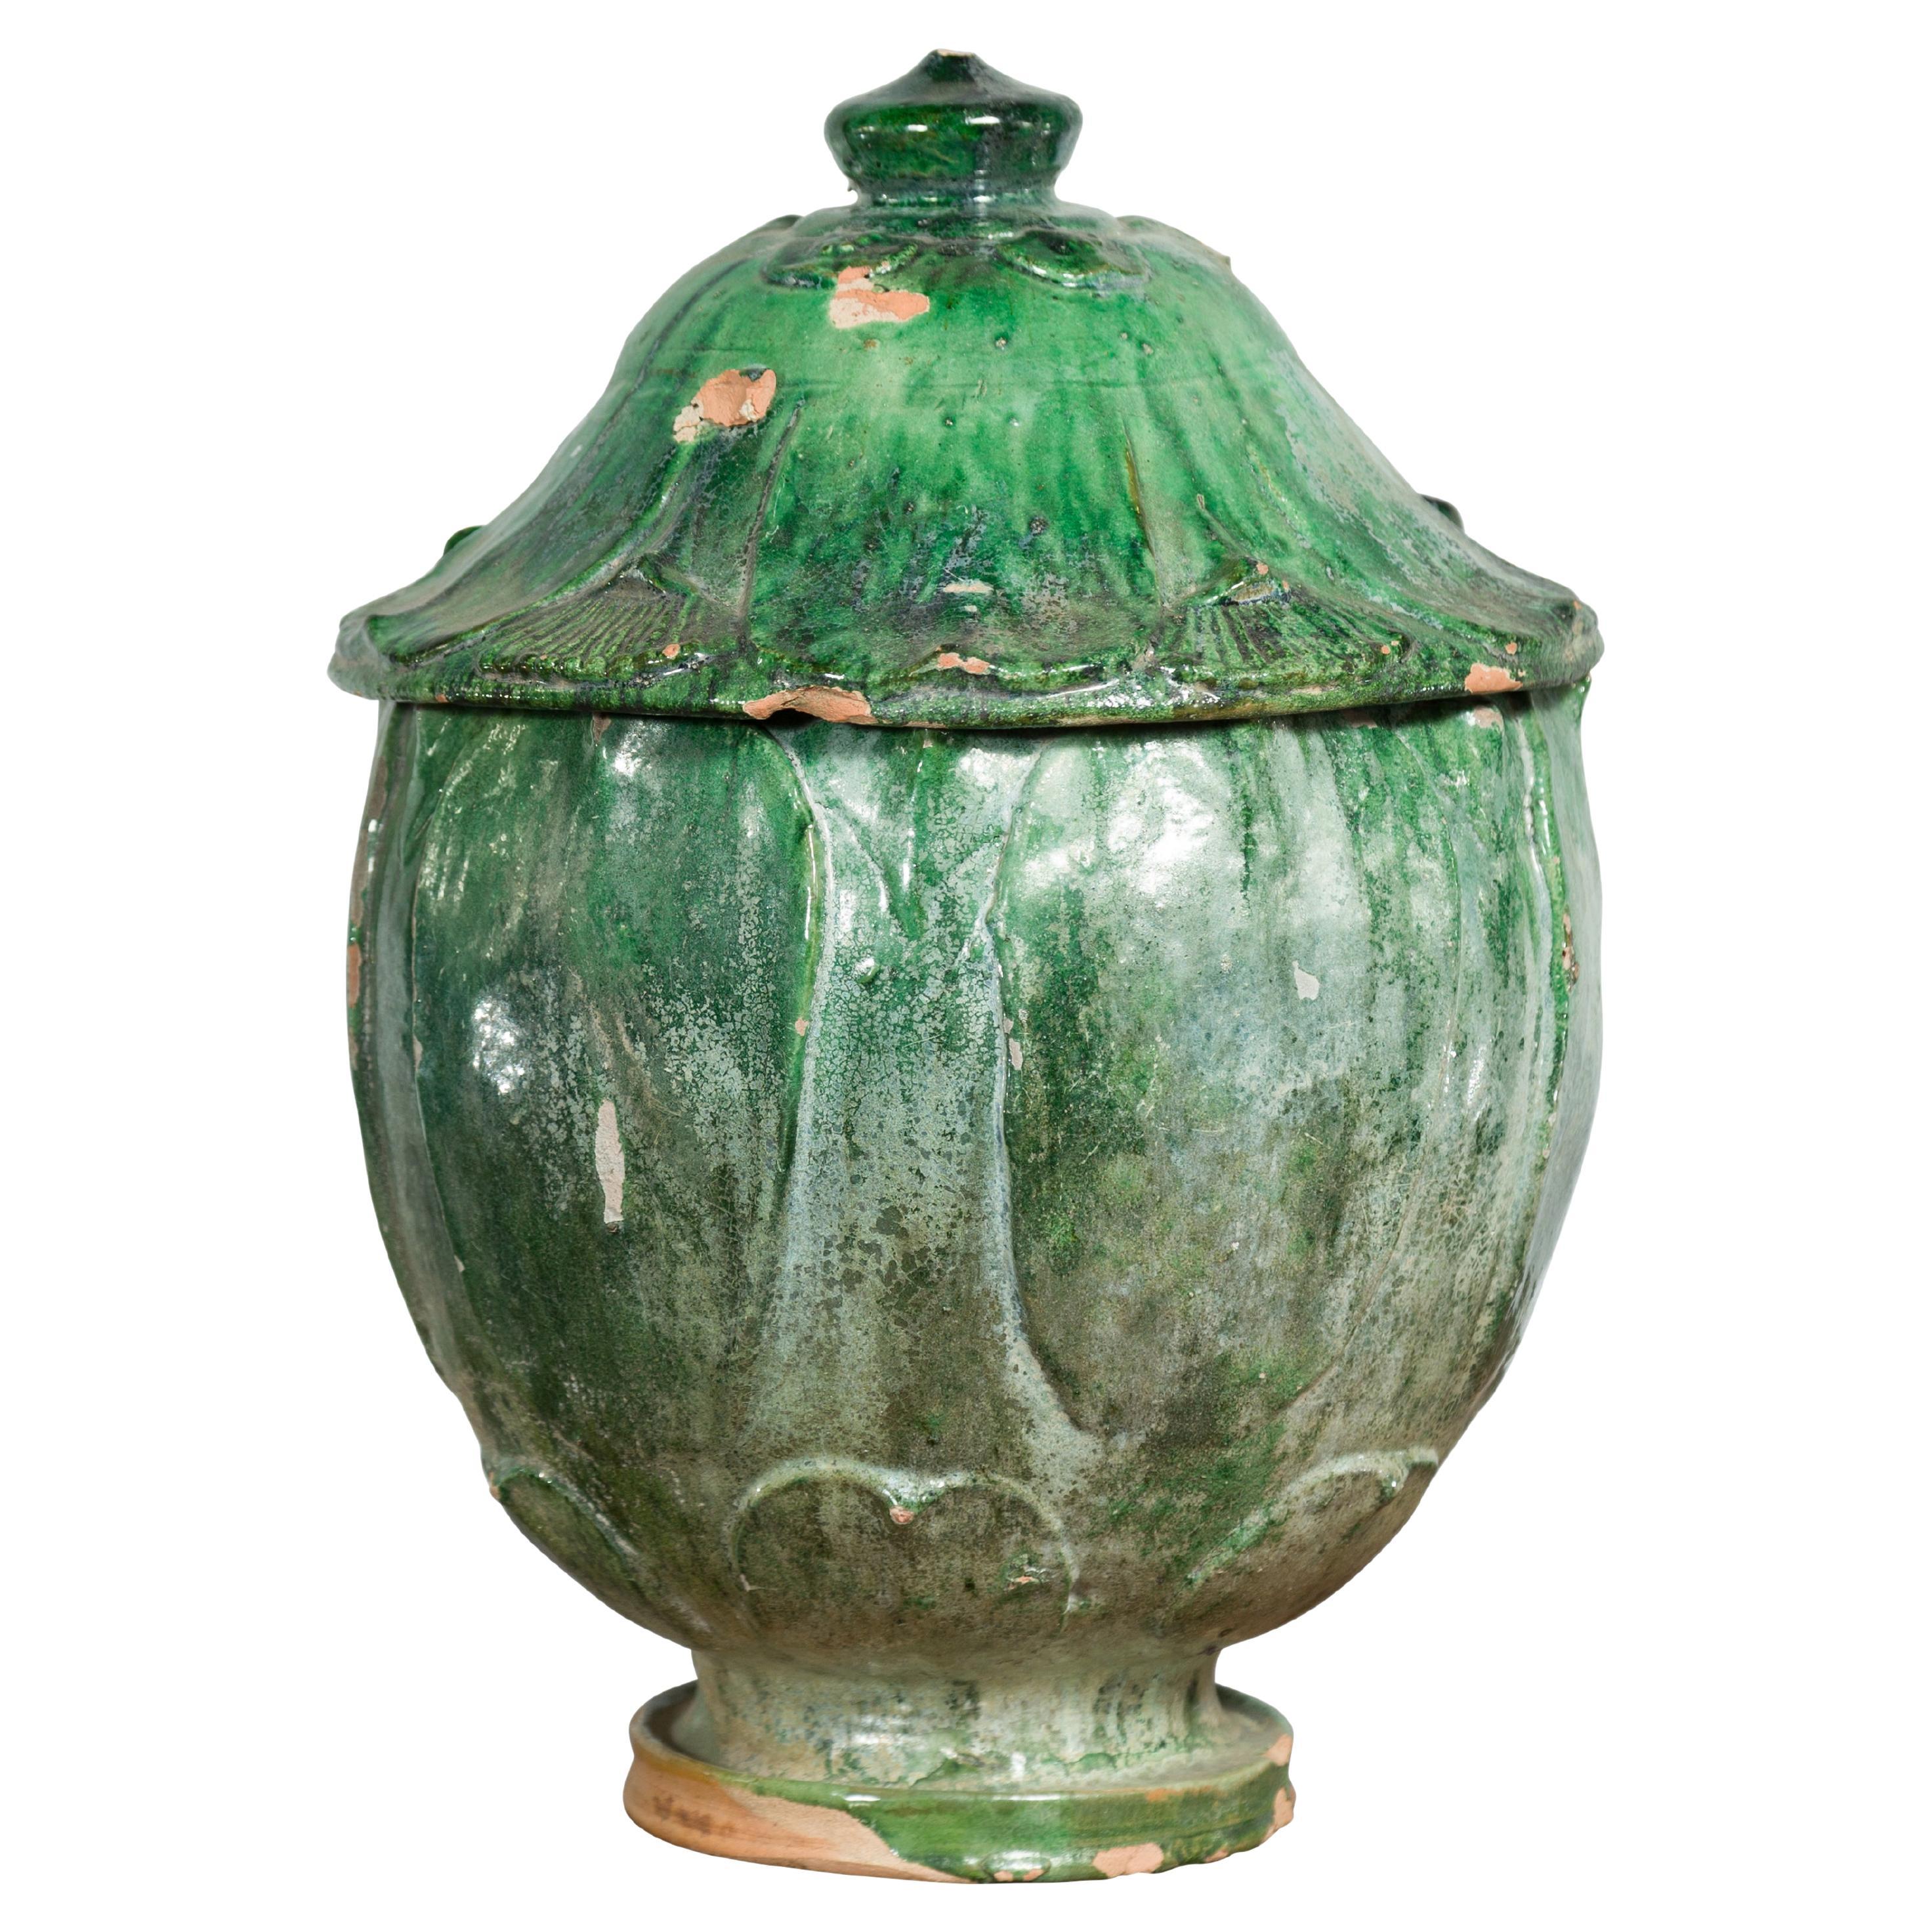 Chinese 18th Century Qing Dynasty Green Glazed Terracotta Lotus Shaped Jar